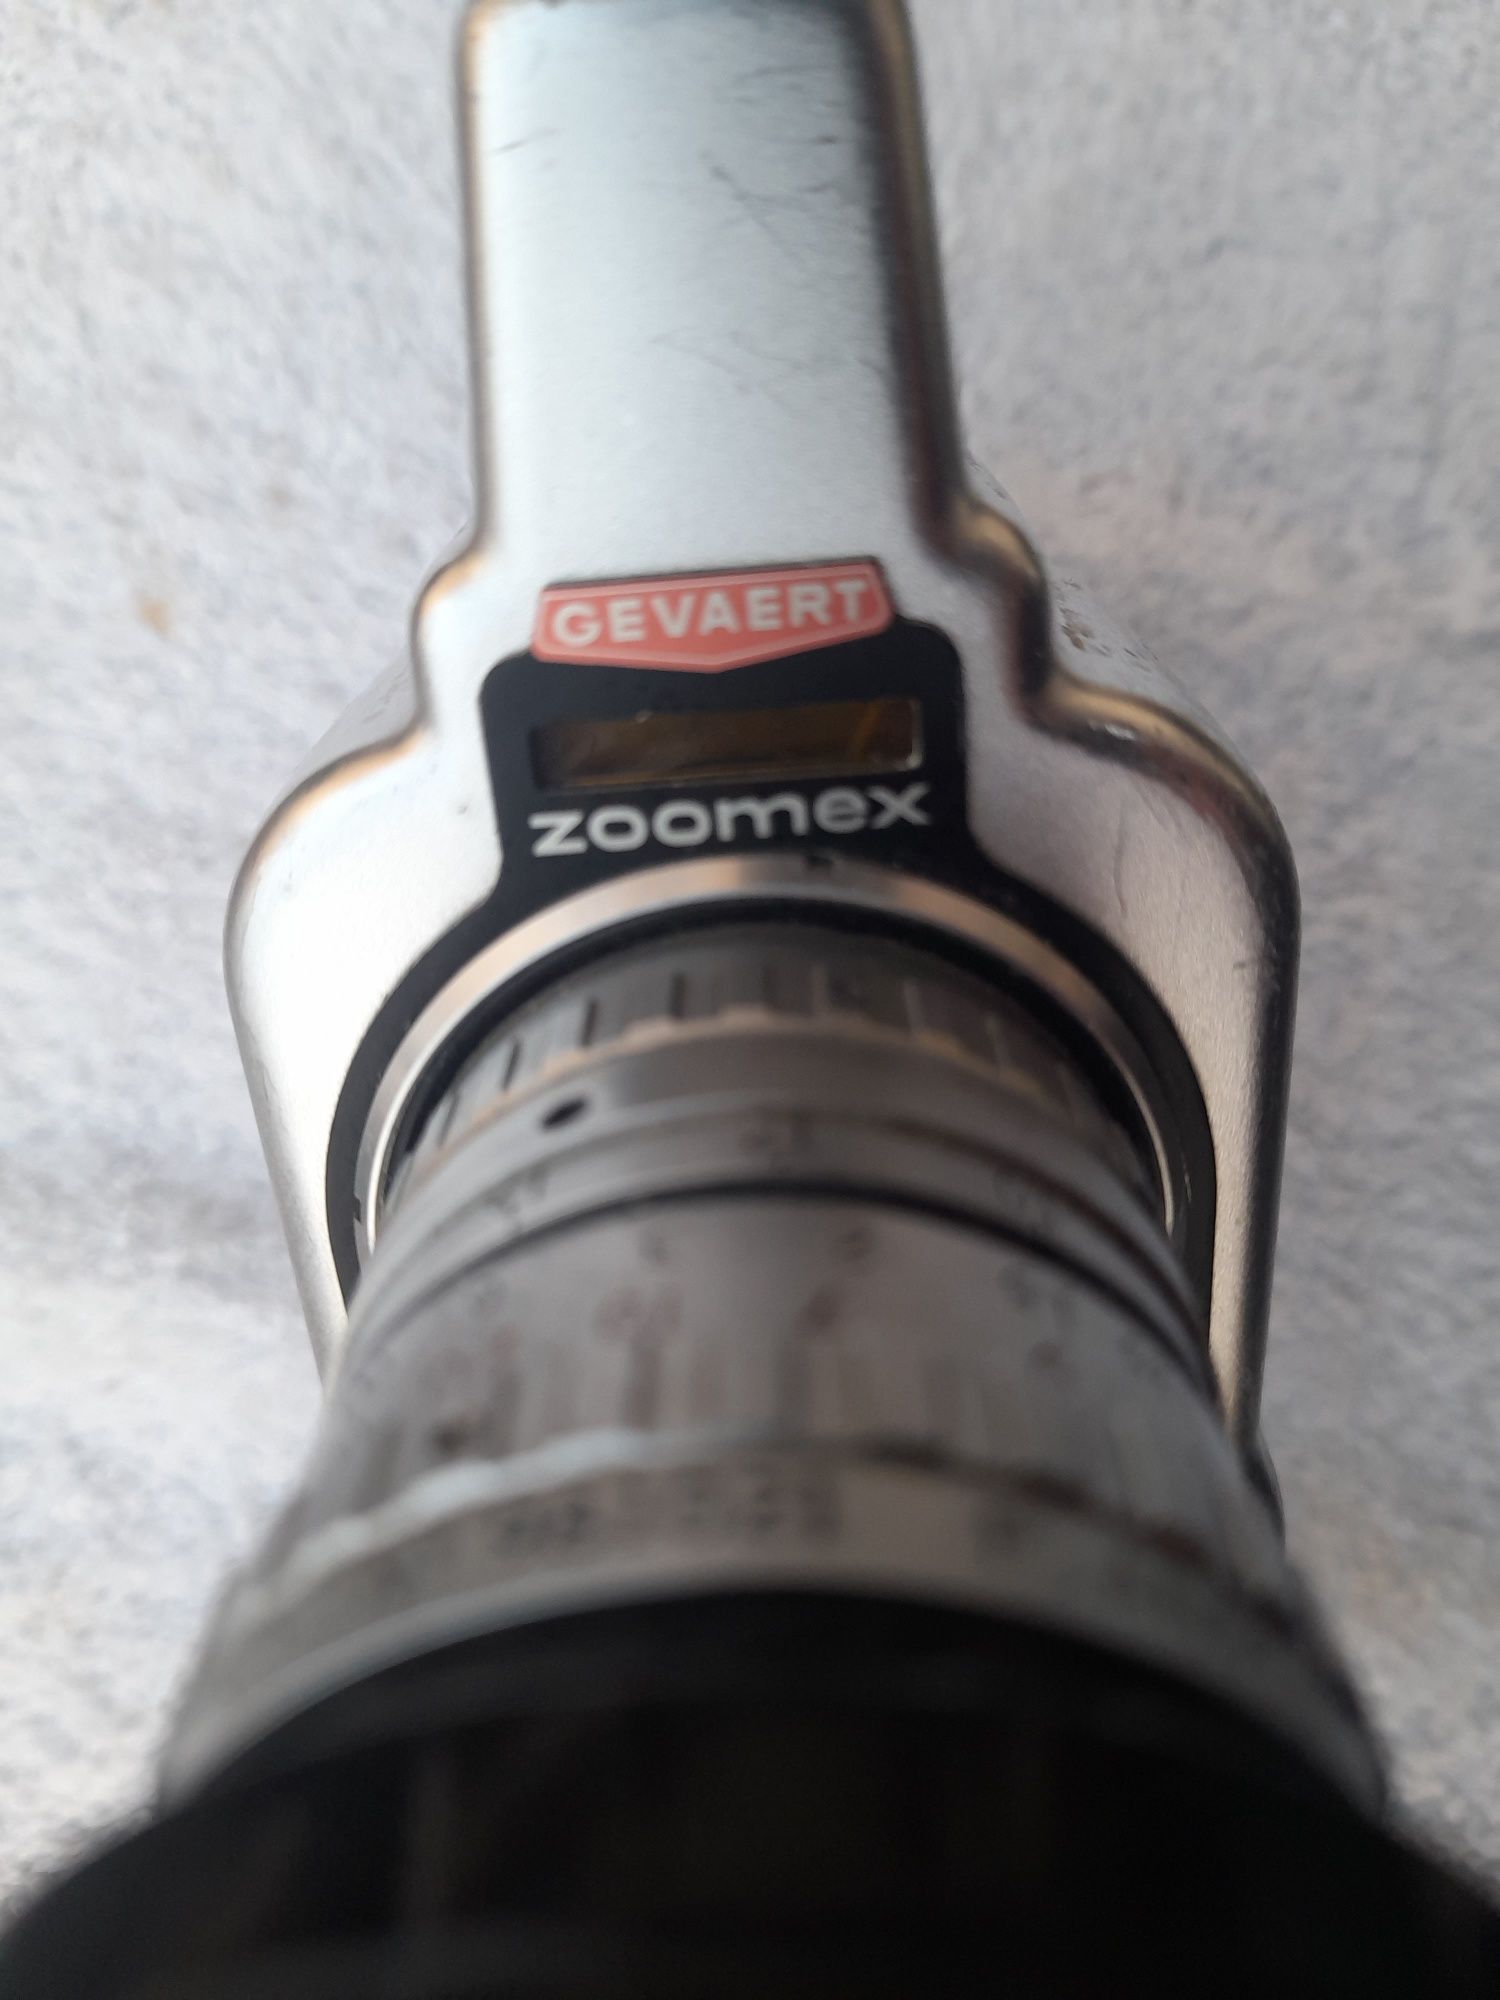 Gevaert Zoomex camera foto